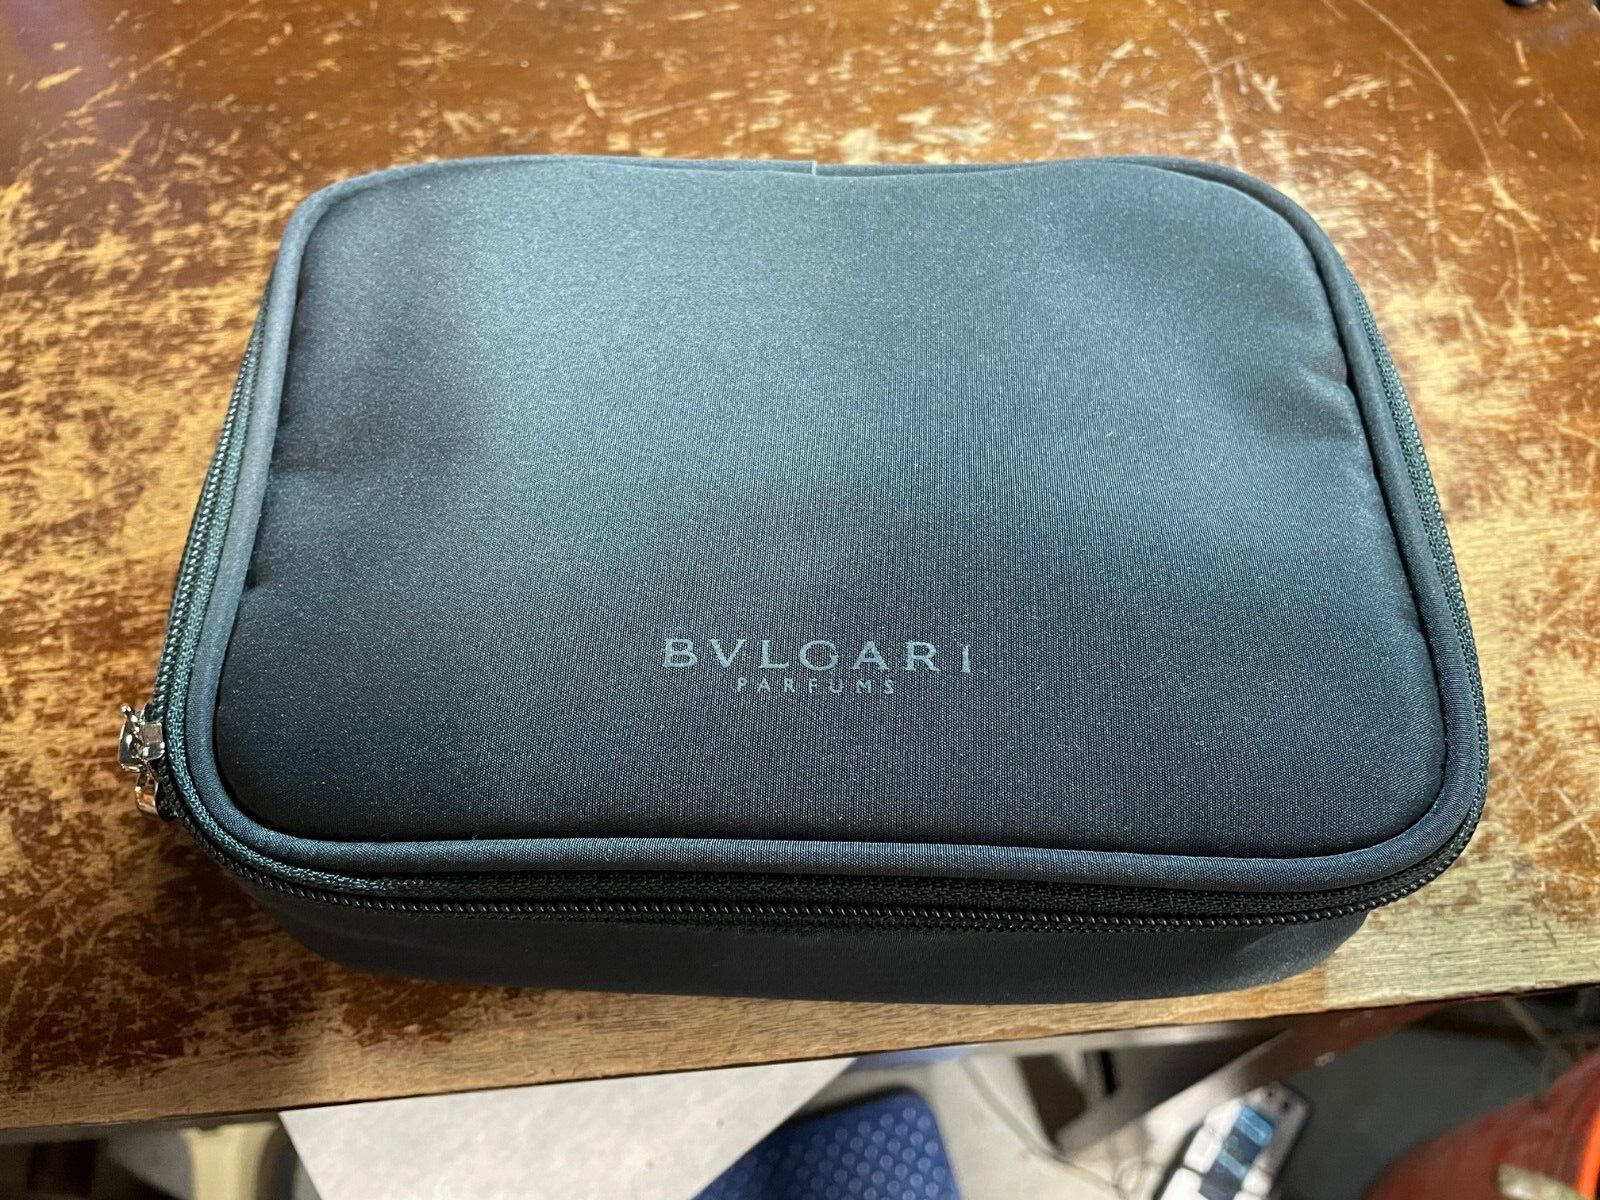 Bvlgari BULGARI Toiletries Alitalia Airlines Travel Complimentary Gift